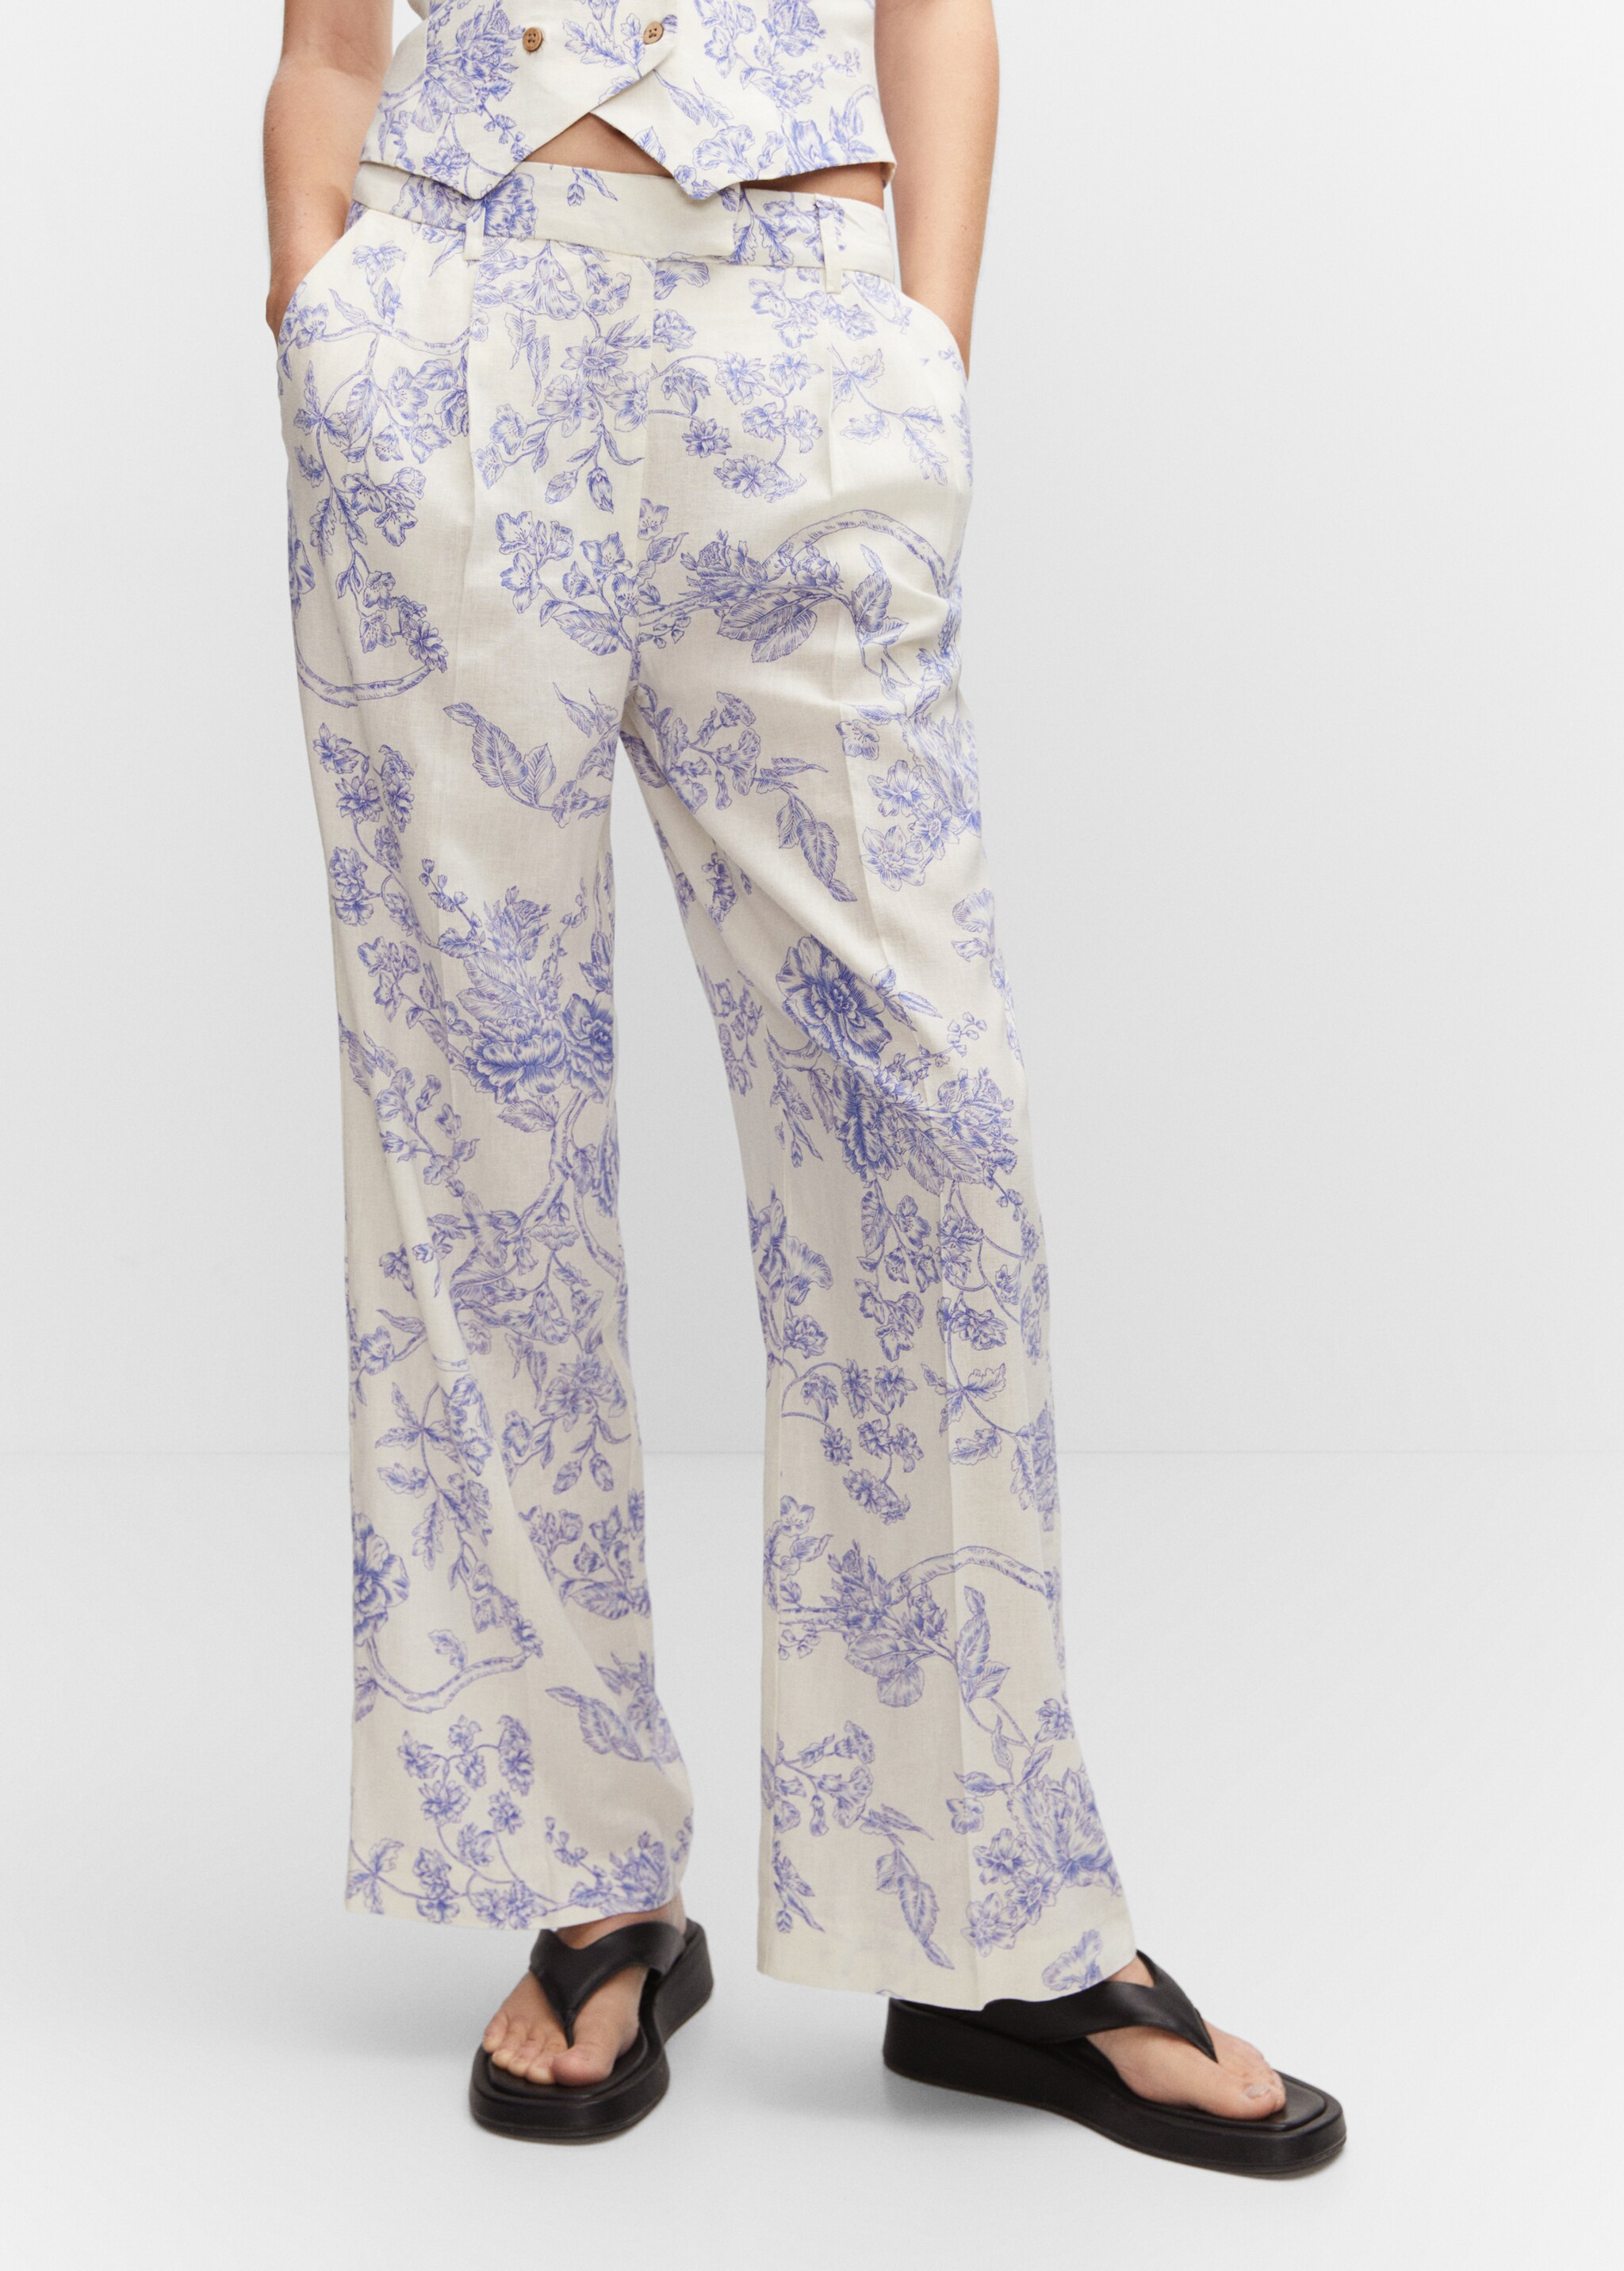 Printed linen trousers - Medium plane